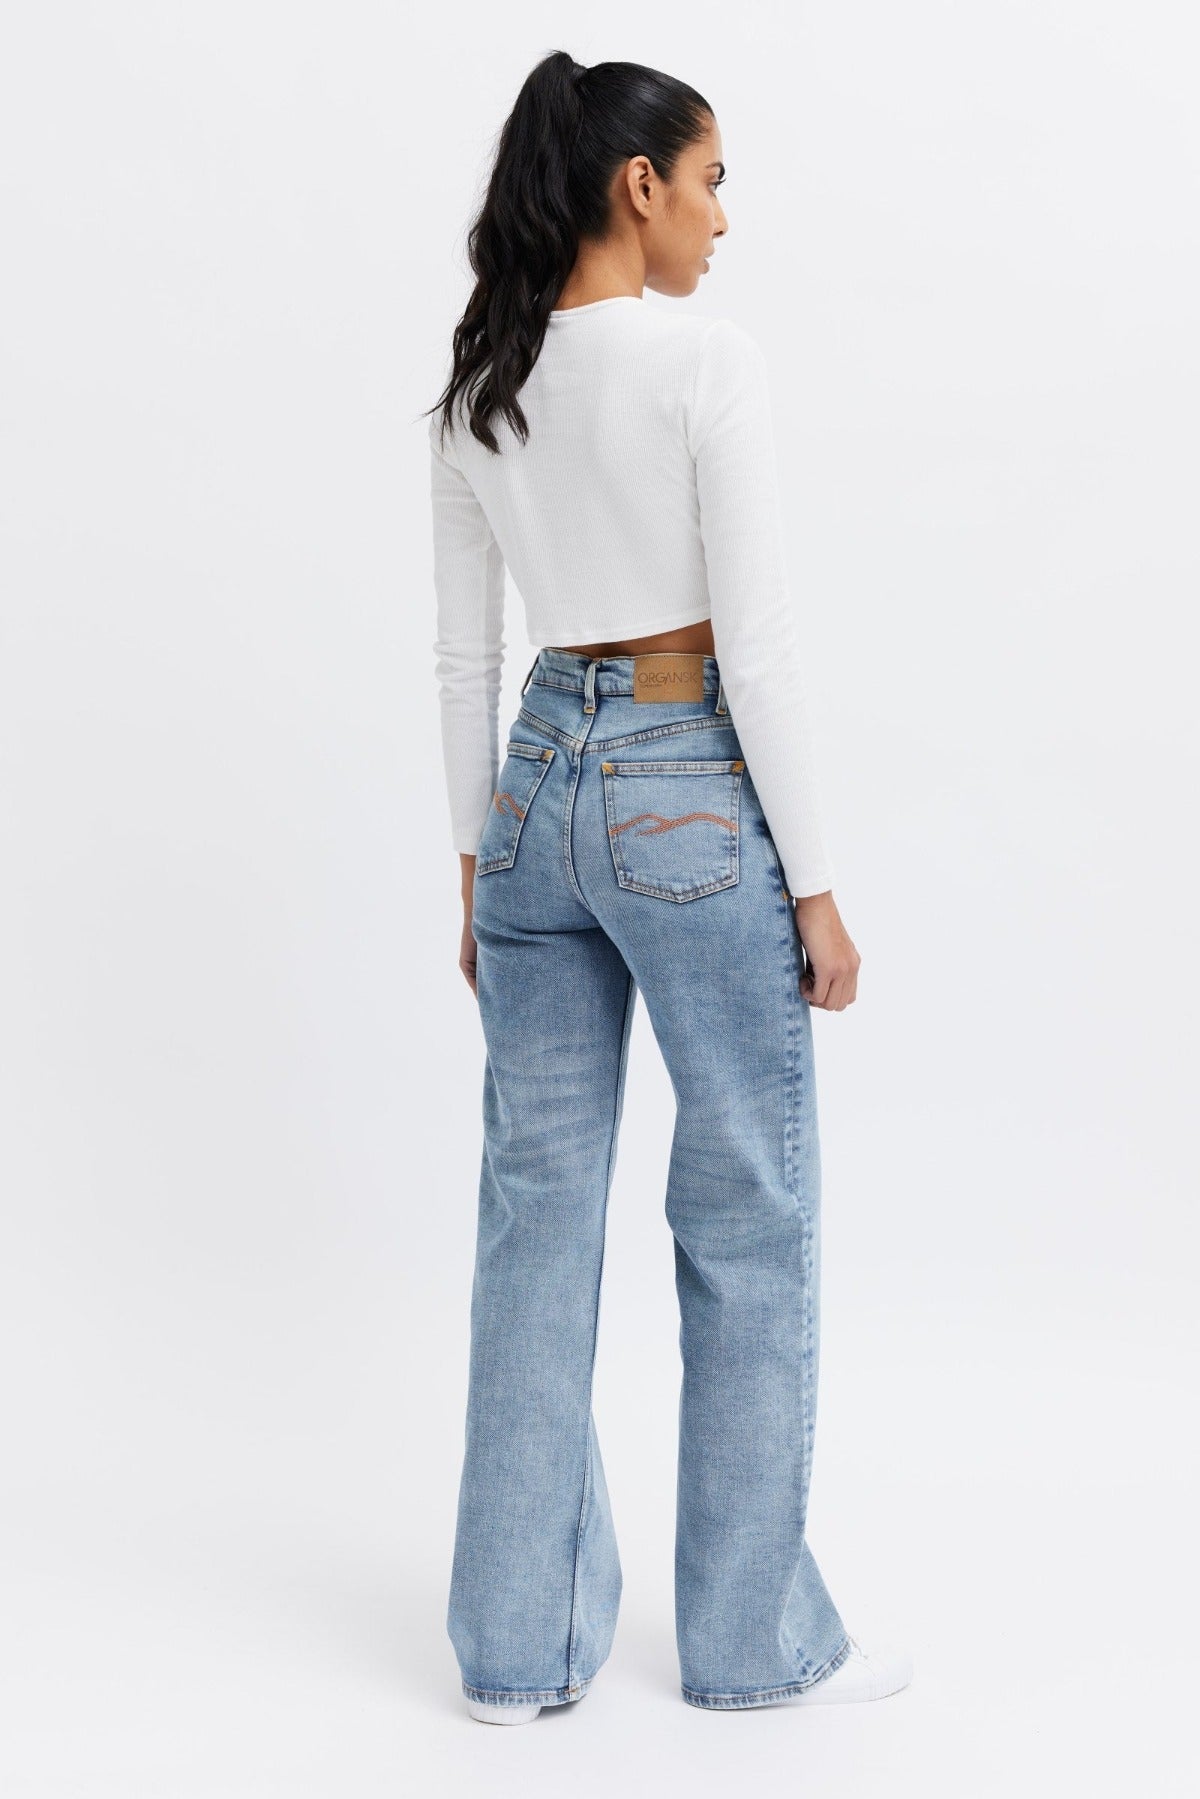 wide leg female jeans- ethical fashion